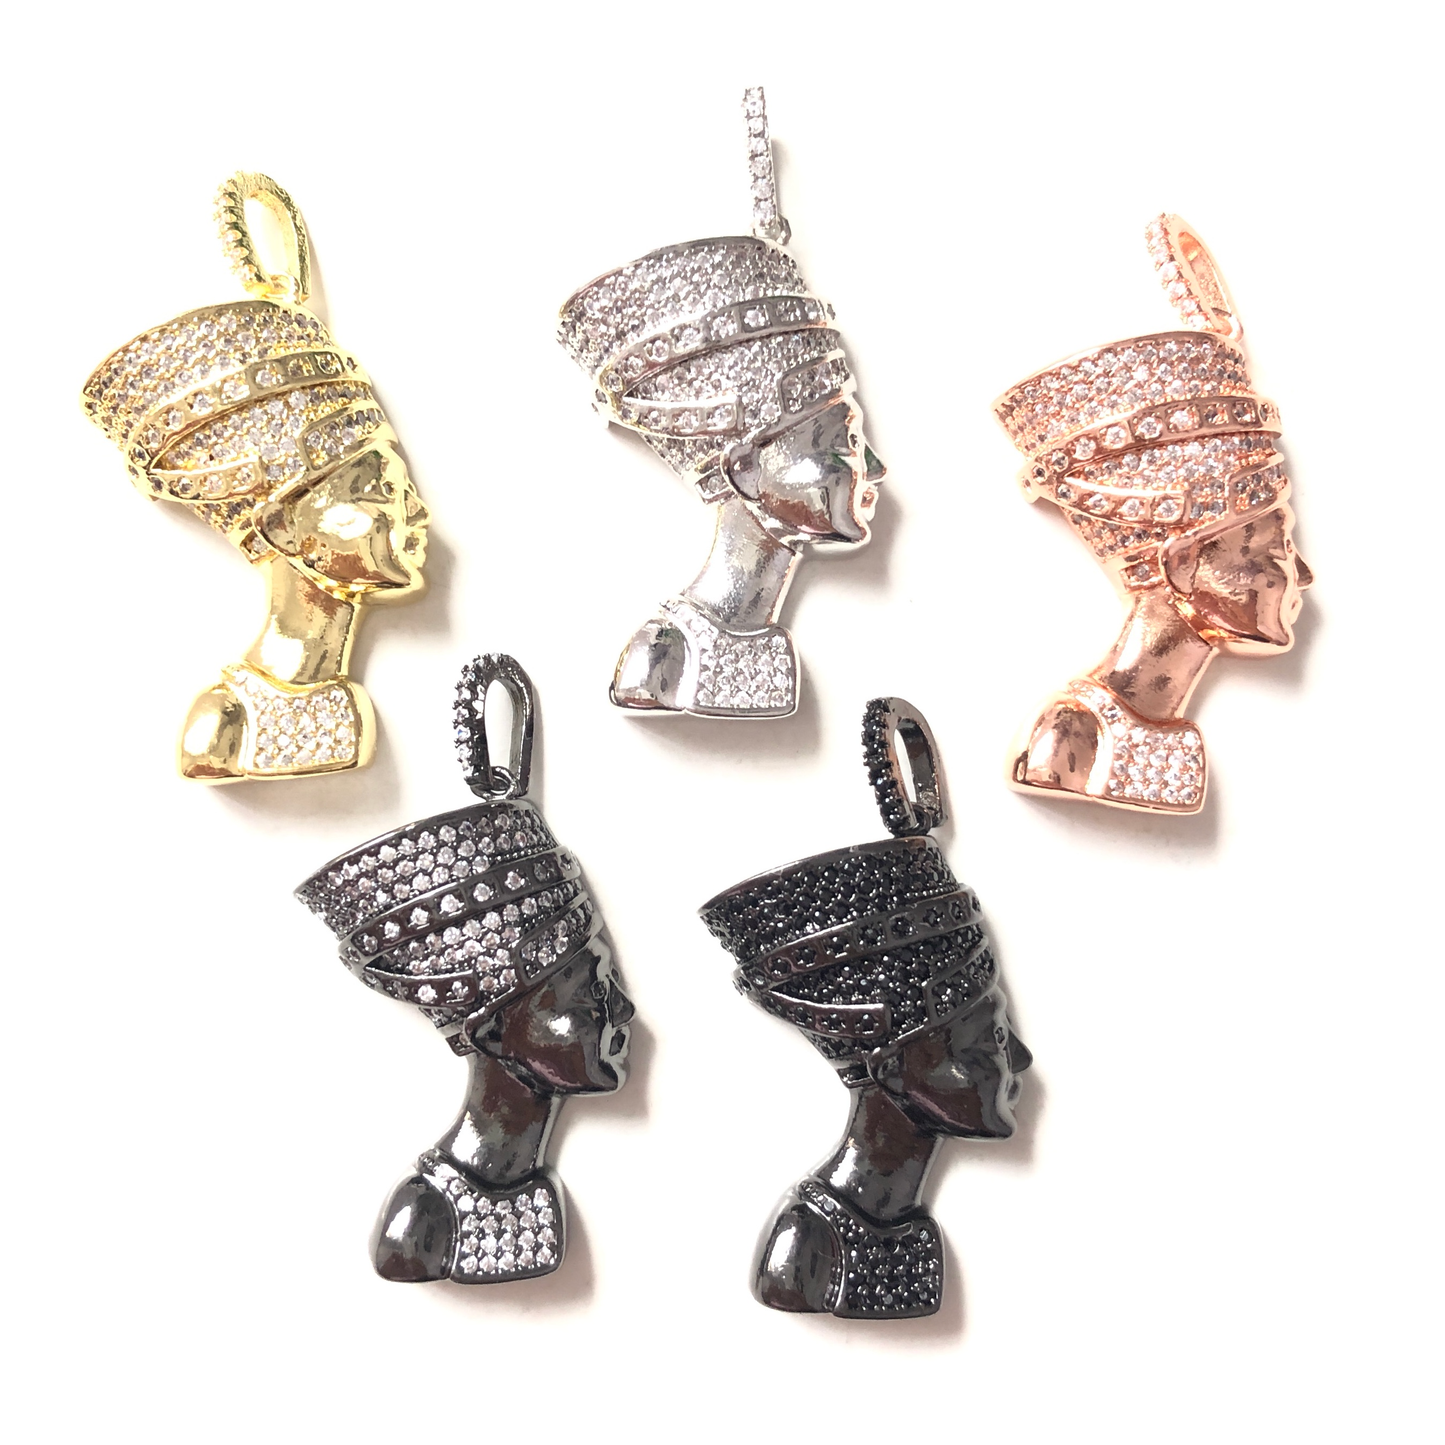 10pcs/lot 41*21mm CZ Paved Queen Nefertiti Charms Mix Colors CZ Paved Charms Large Sizes Queen Charms Charms Beads Beyond